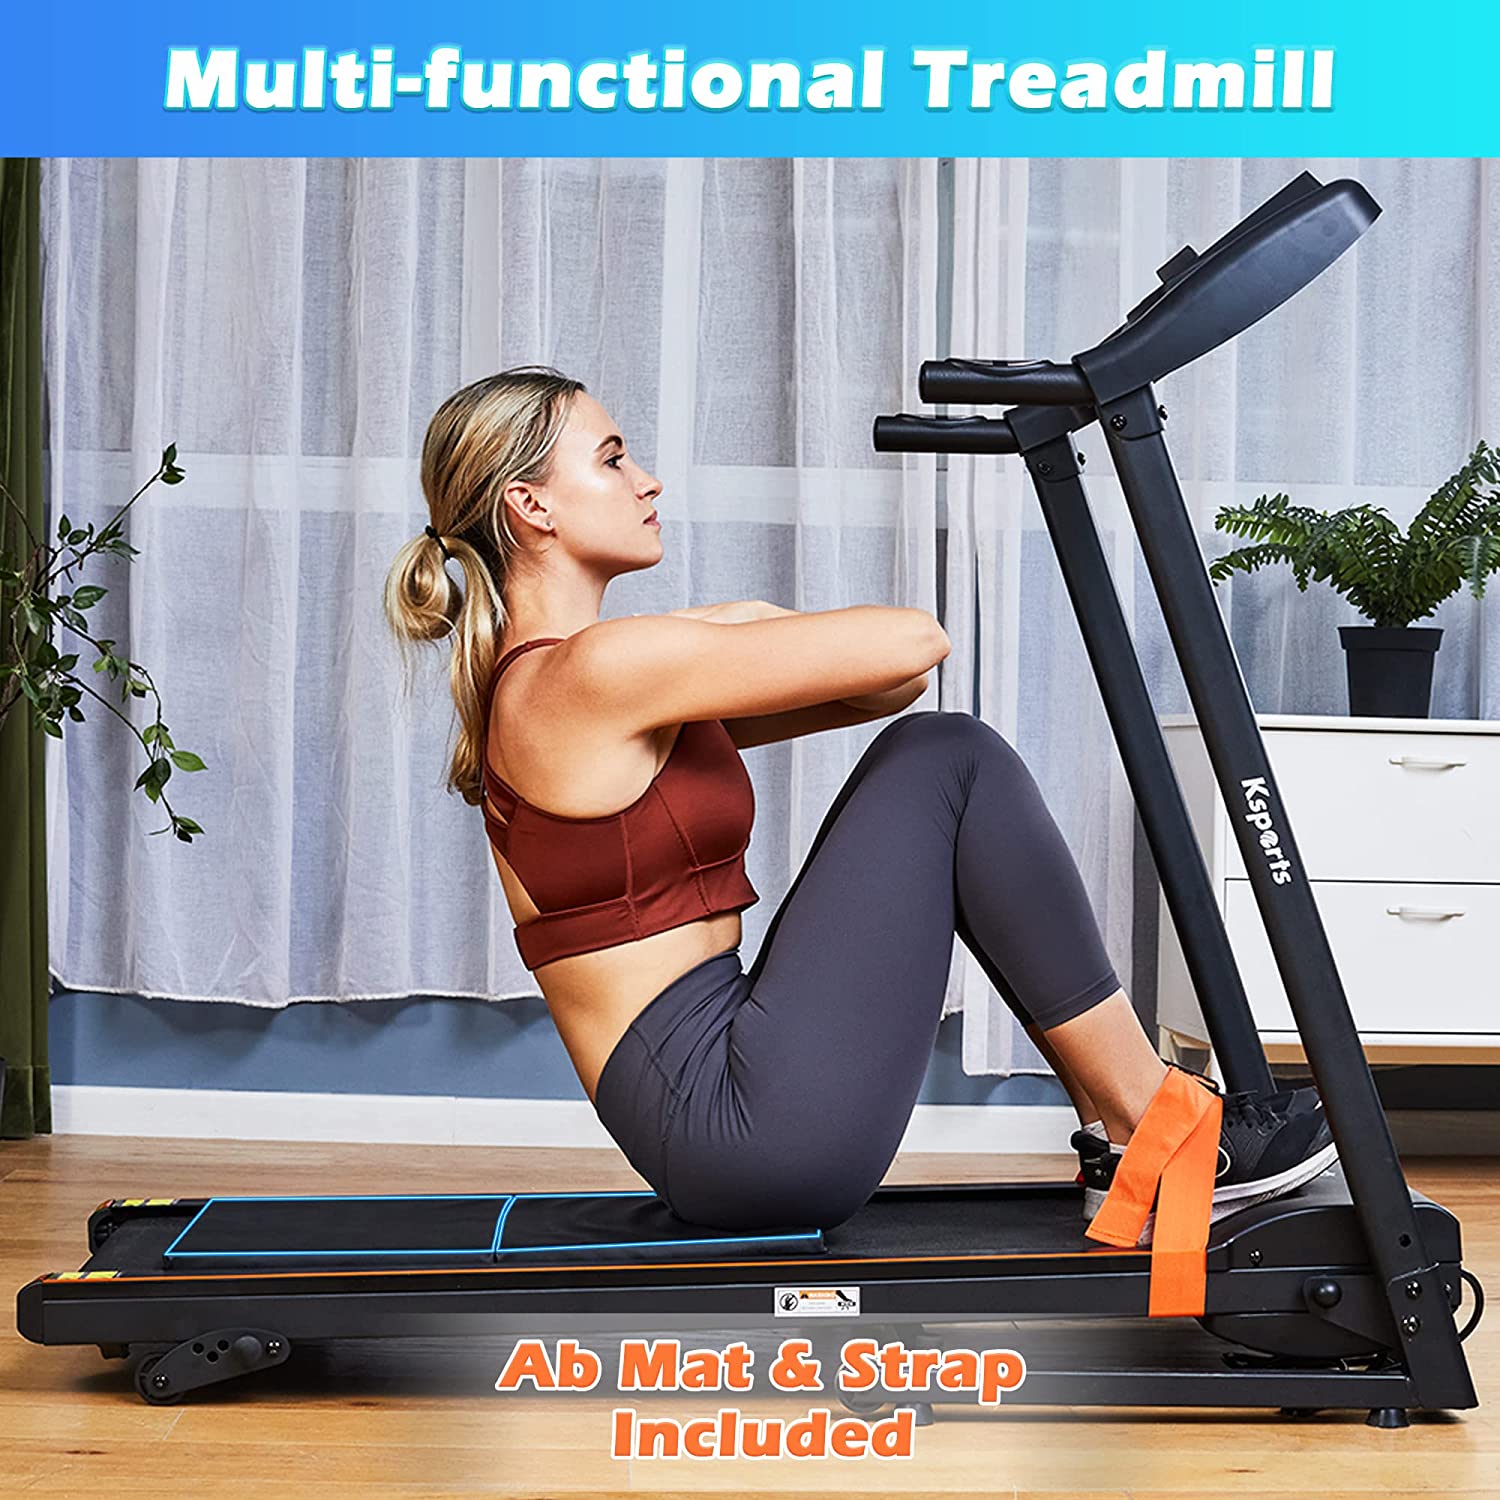 Ksport Multi-functional Treadmill Bundle - Model KSU5001(2.25HP/Max:265lbs)